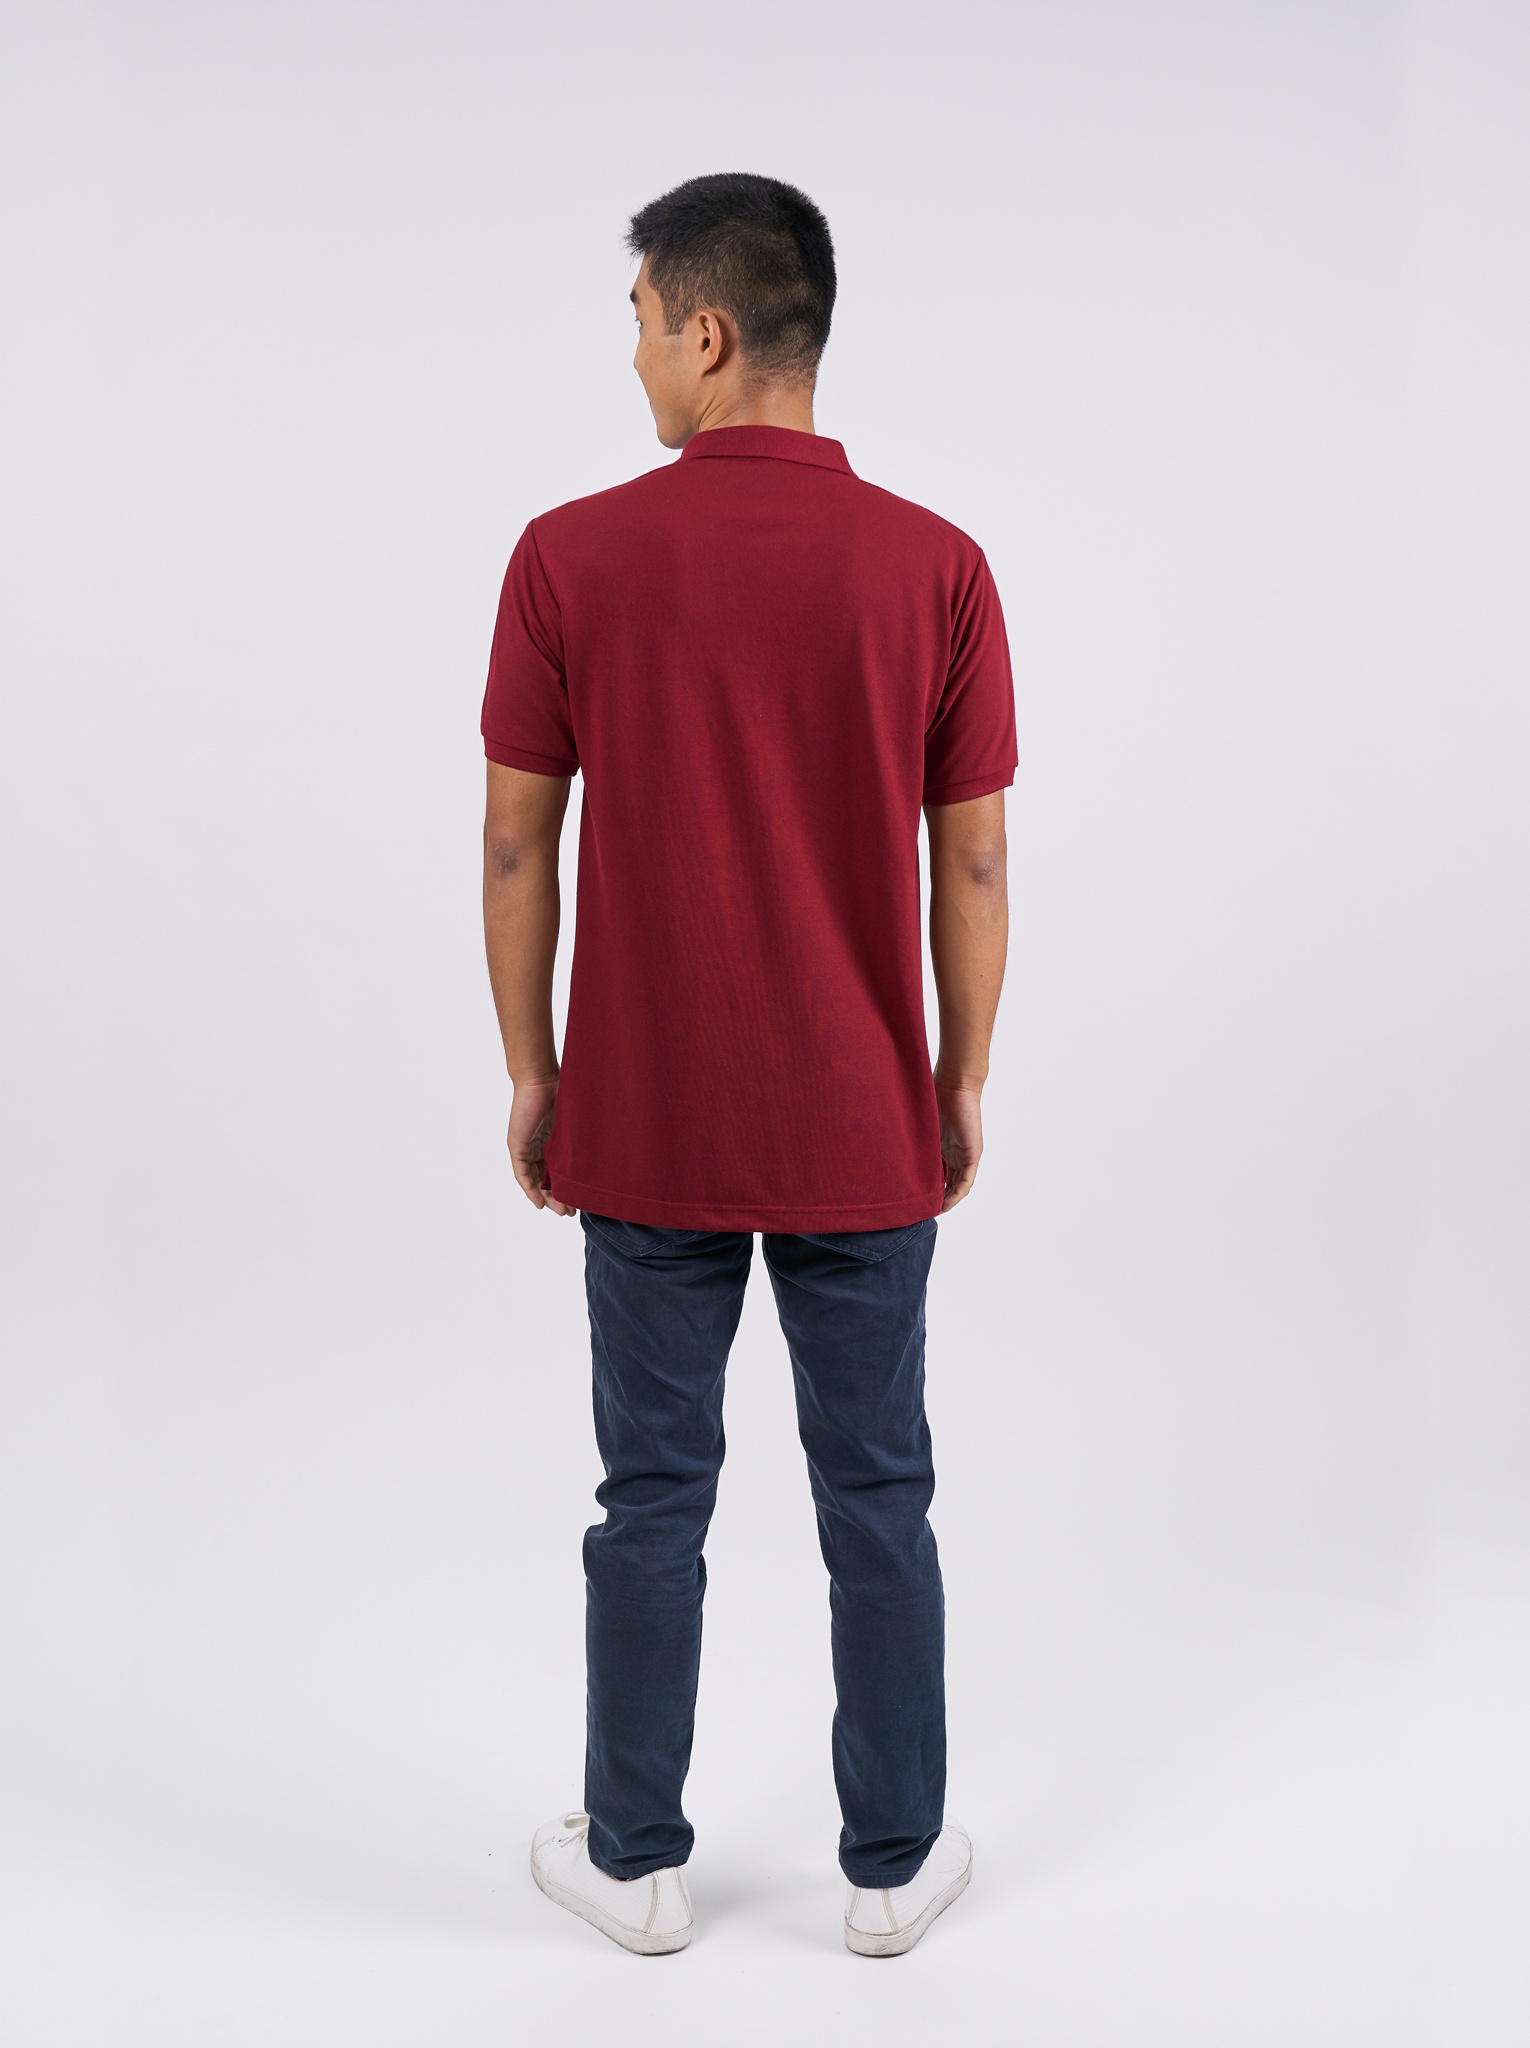 Polo Shirt เสื้อโปโล (Scarlet Red, สีแดงเลือดหมู)(Unisex)